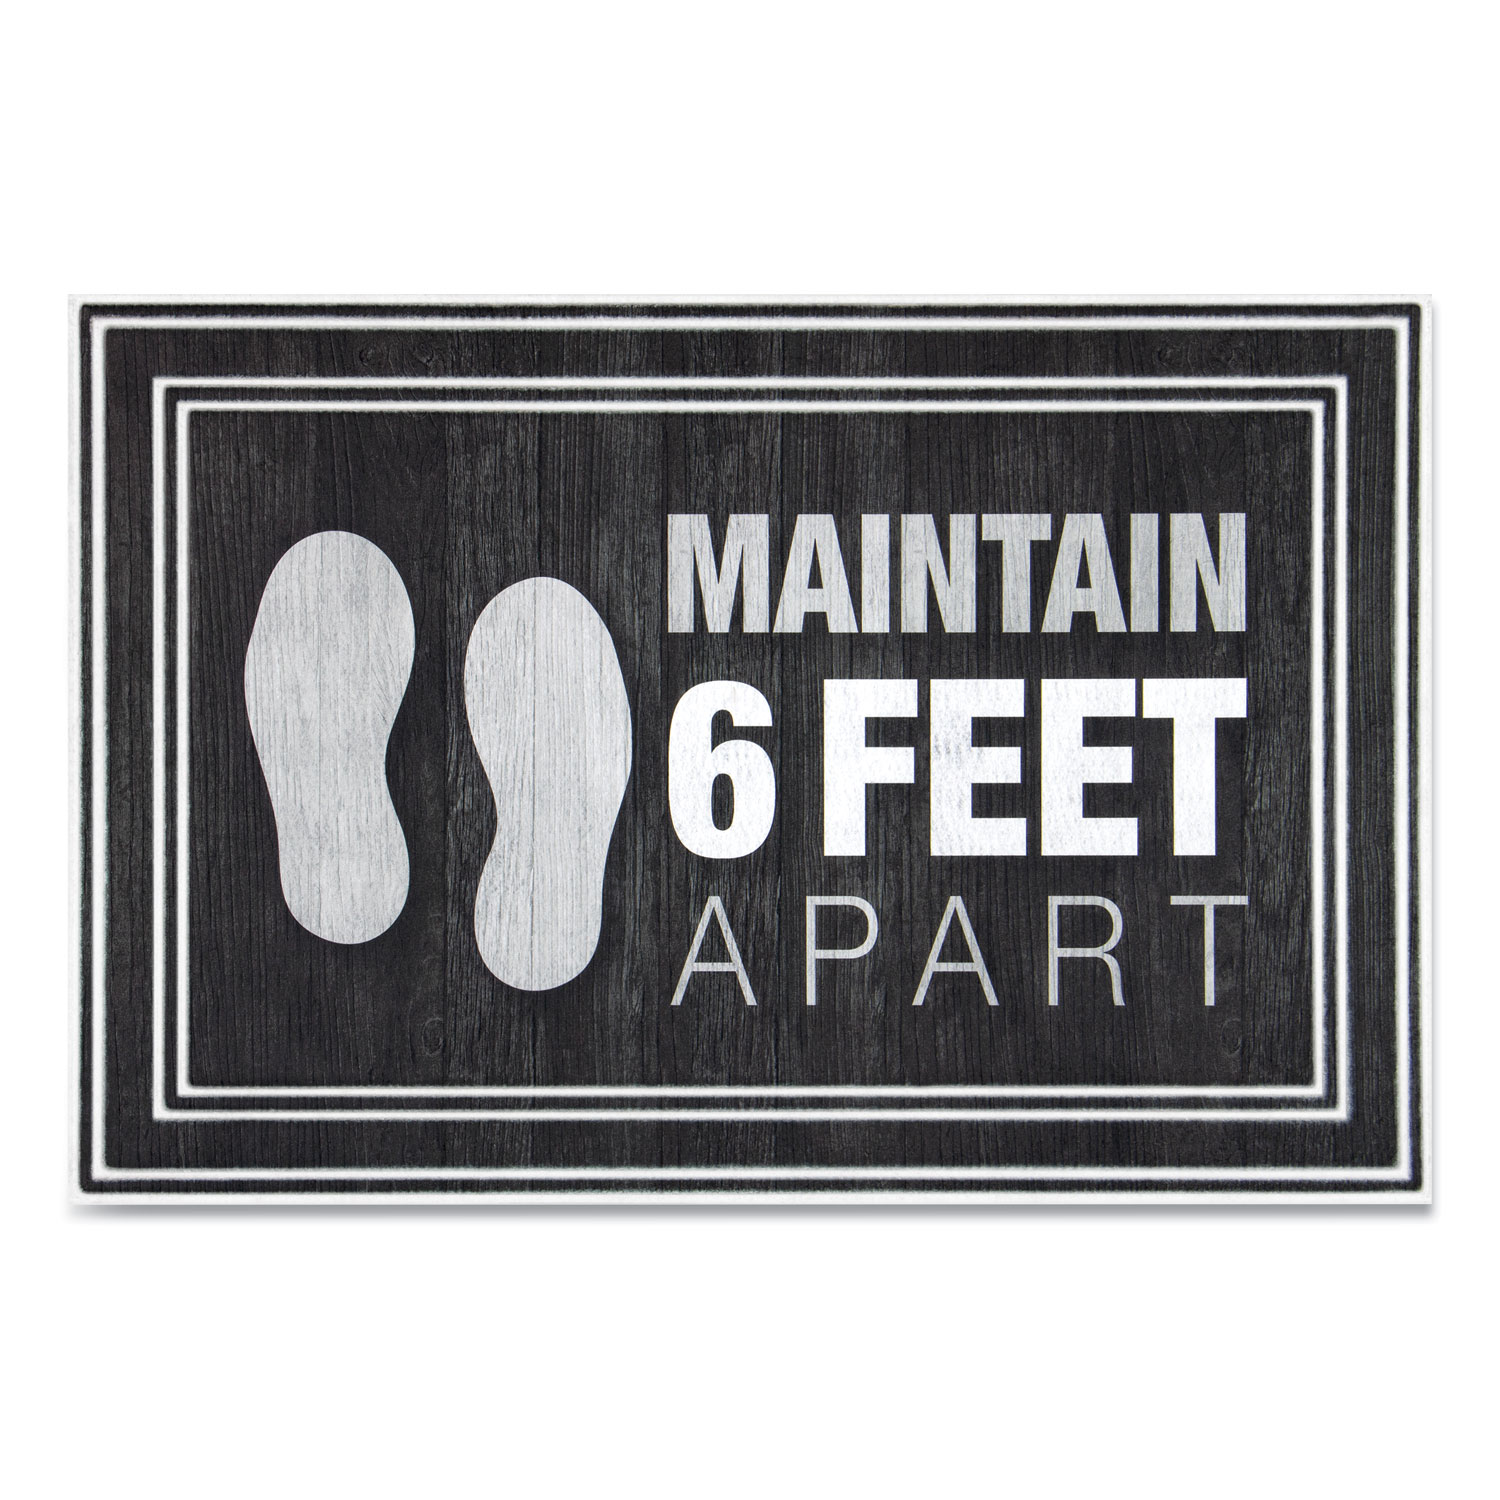  Apache Mills Message Floor Mats, 24 x 36, Charcoal, Maintain 6 Feet Apart (APH3984528772X3) 